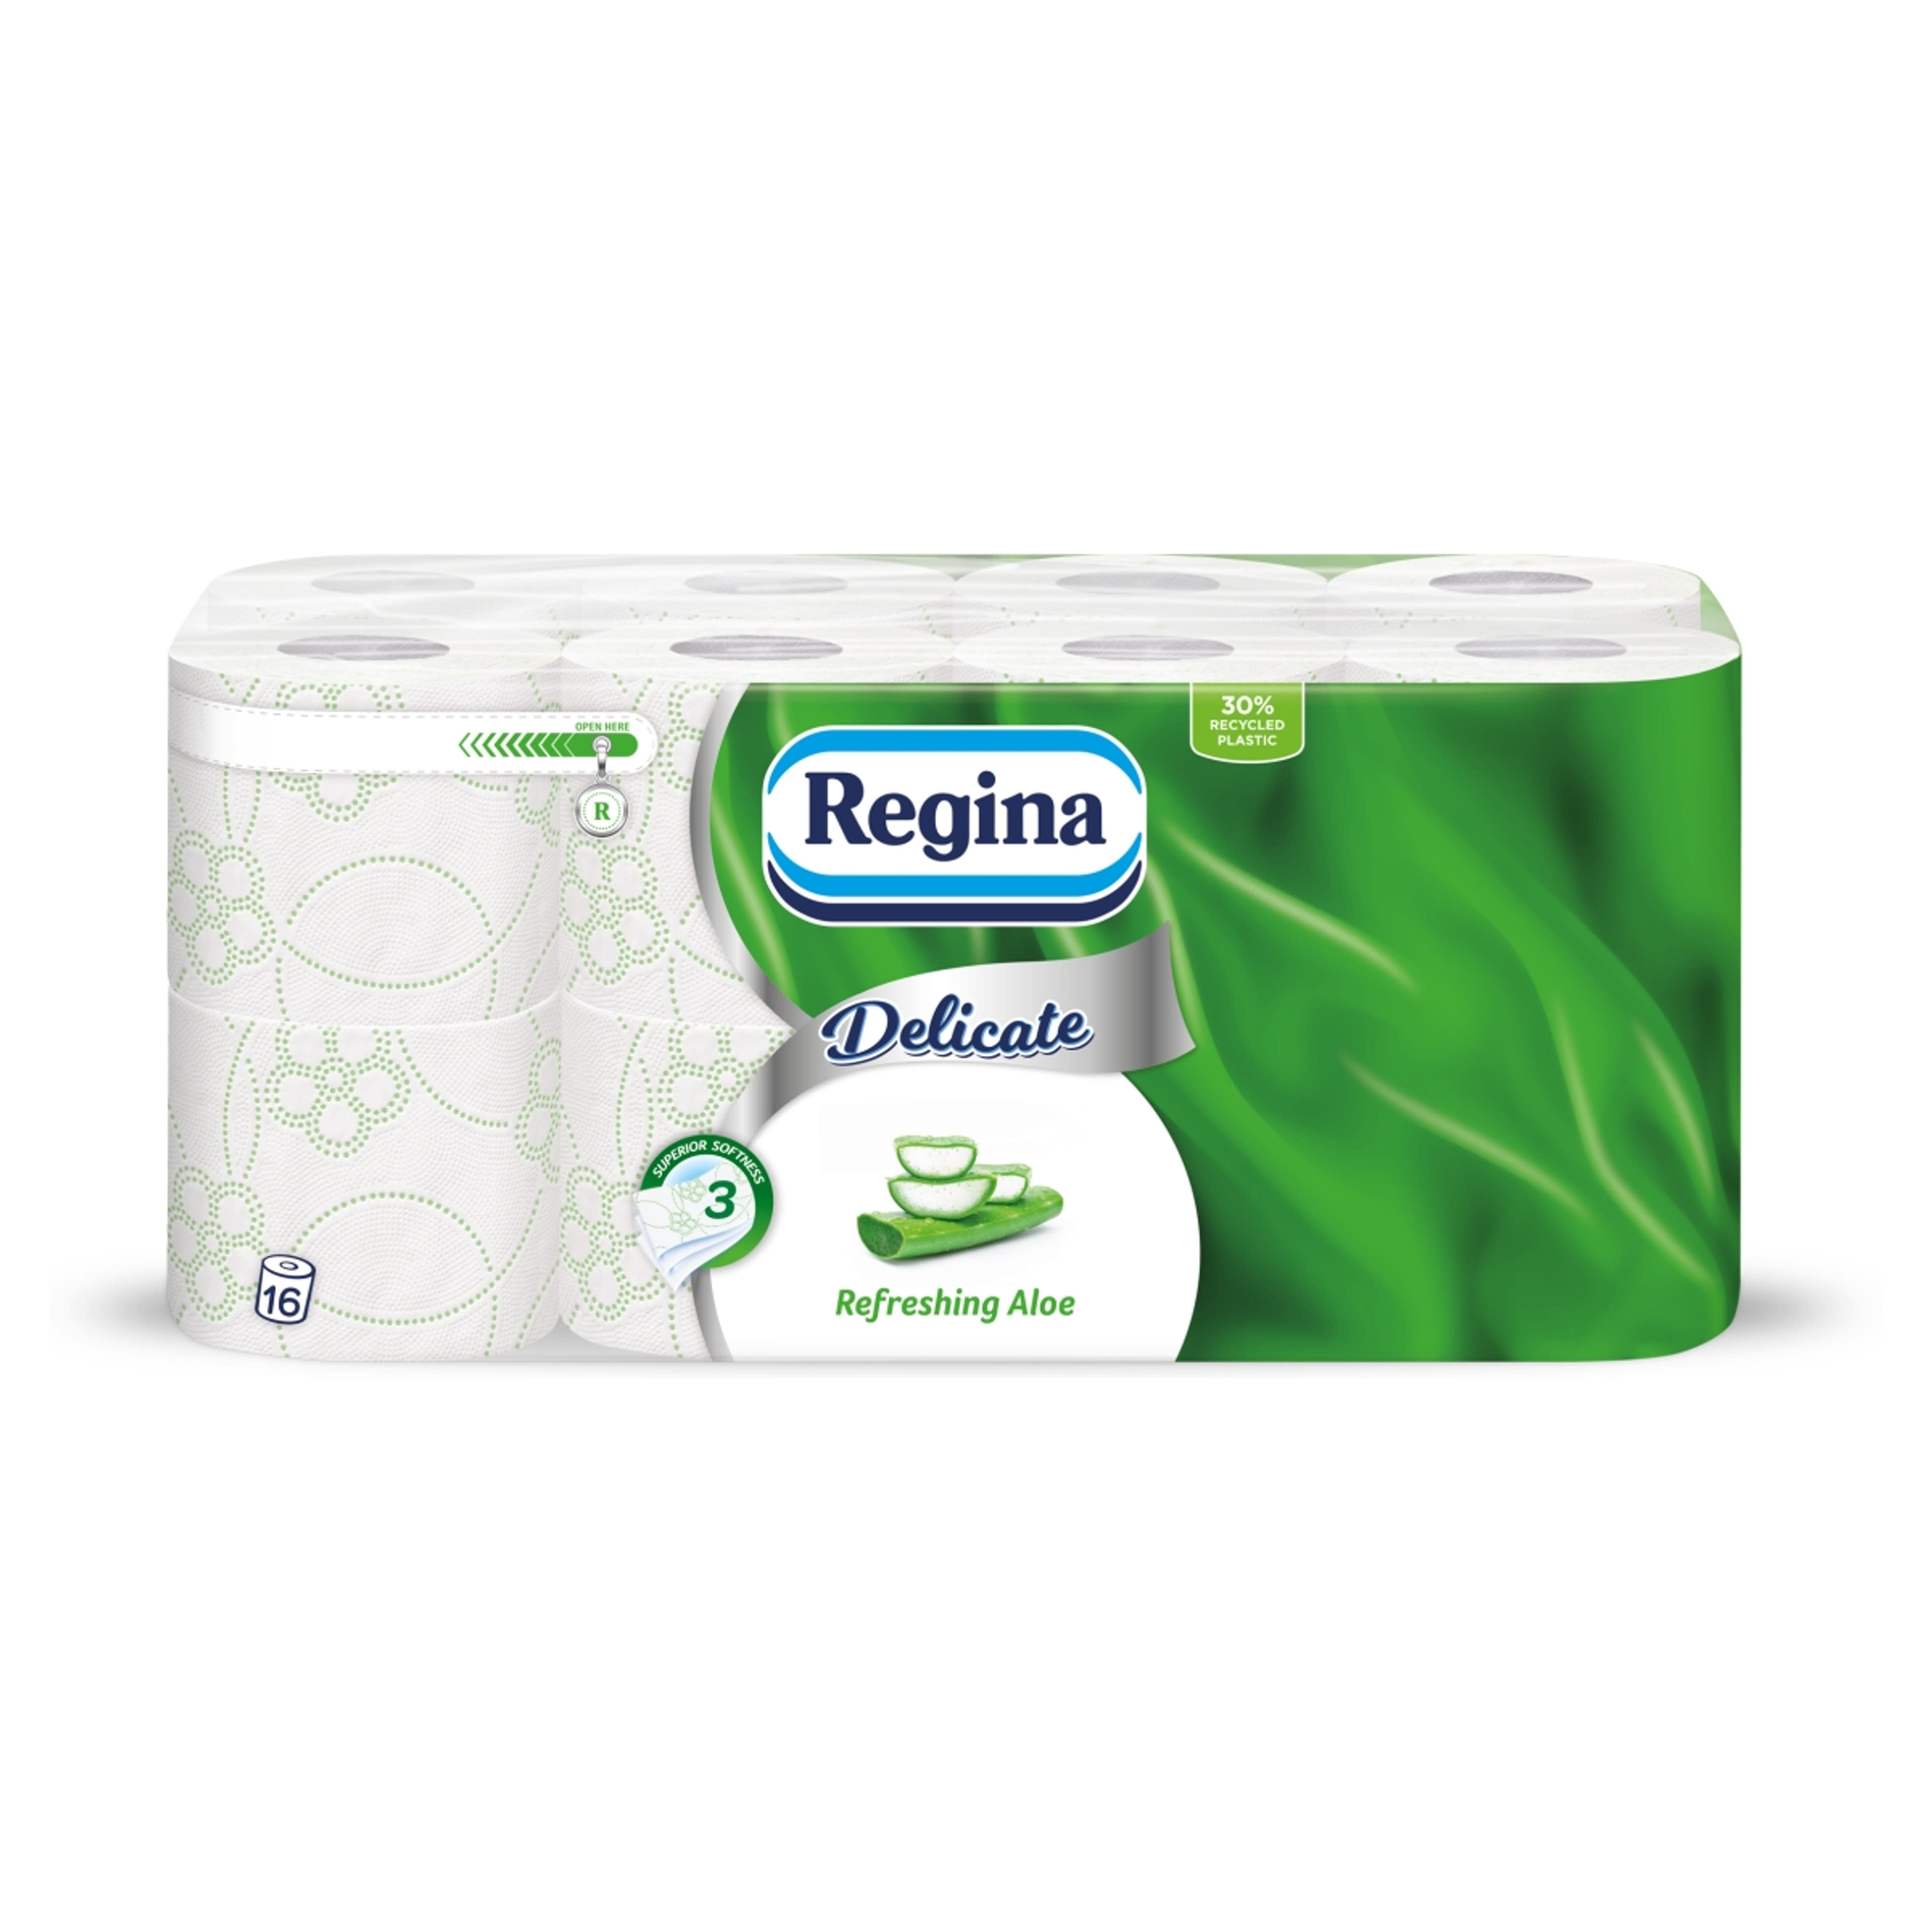 Regina Delicate Refreshing Aloe toalettpapír 3 rétegű - 16 db-1